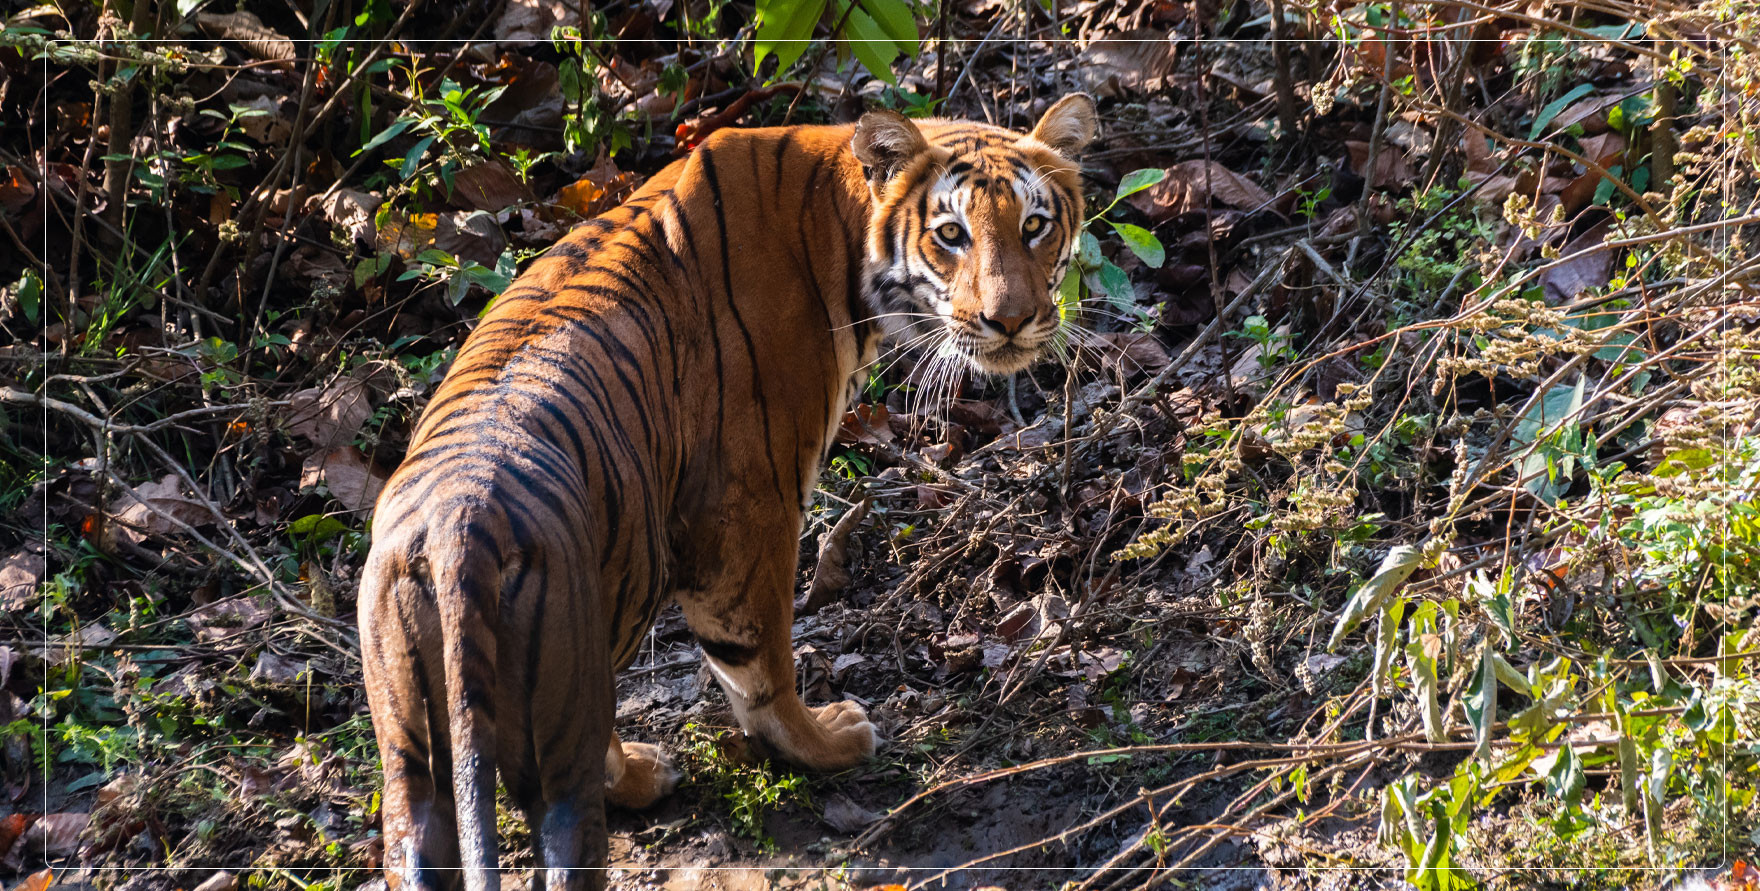 deepak rajbangshi-wildlife photographer-photo-tiger-bardiya 61706920350.jpg